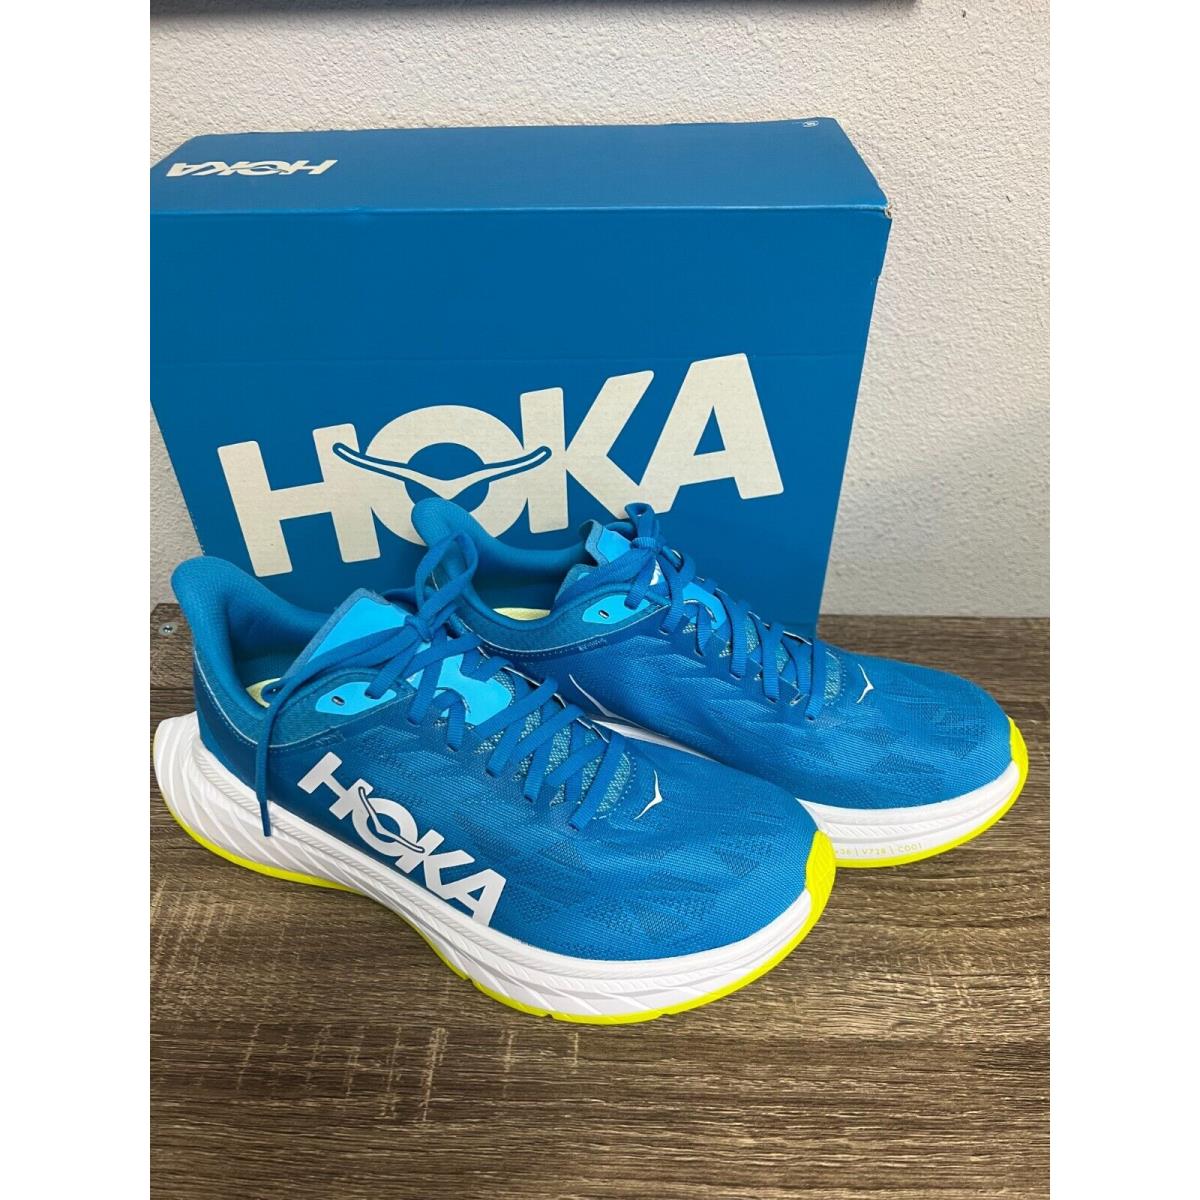 Mens Hoka One One Running Shoes Dbtcr - Blue Citrus 1113526